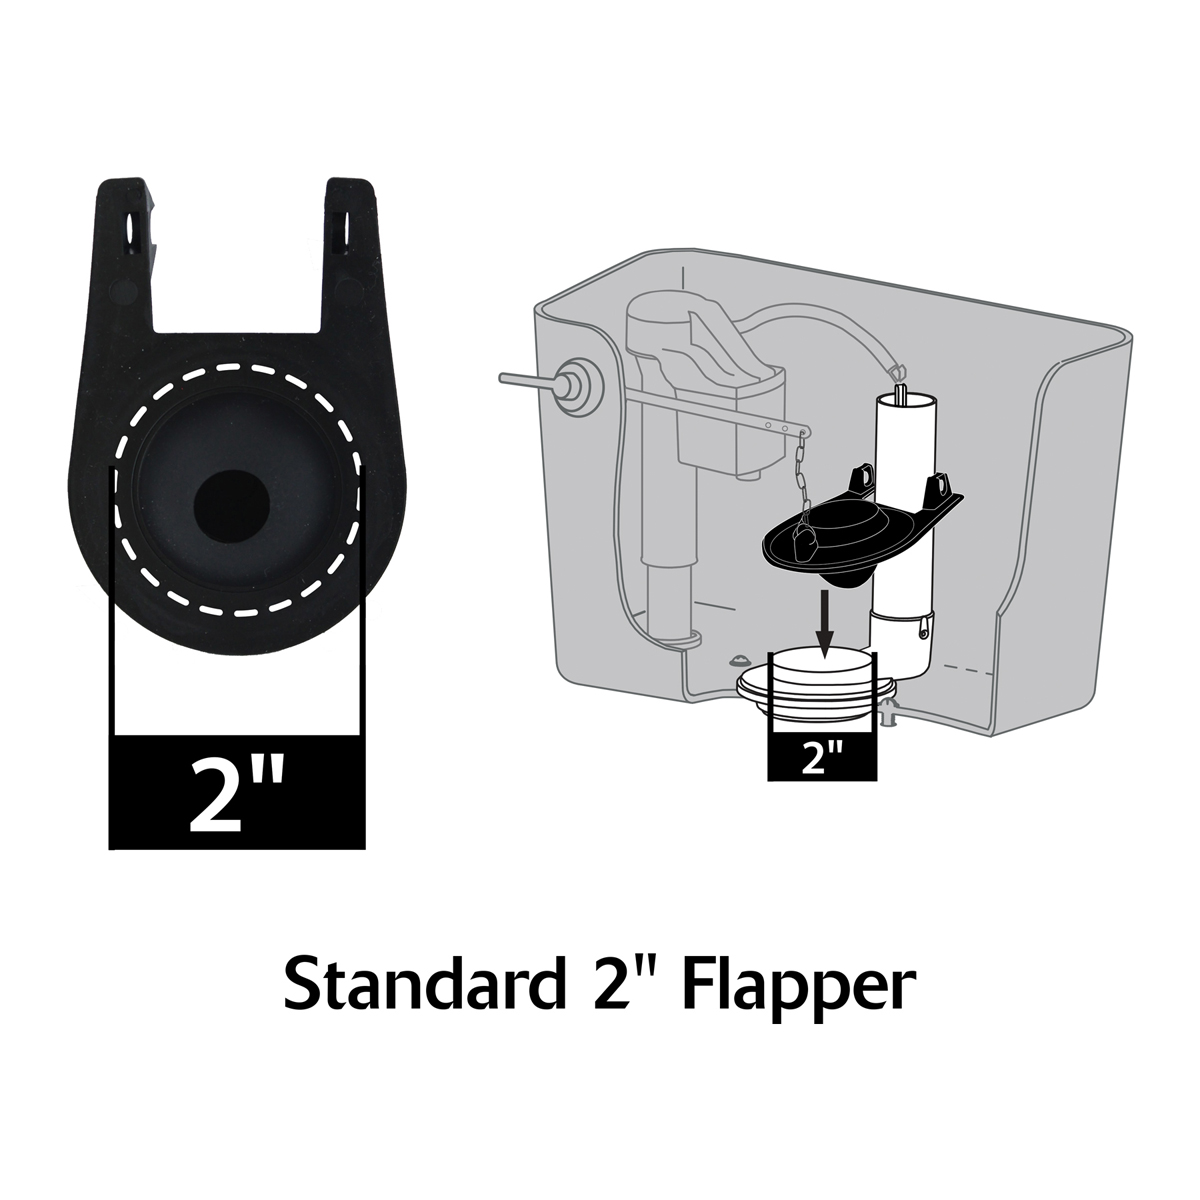 Standard 2 inch flapper dimensions 